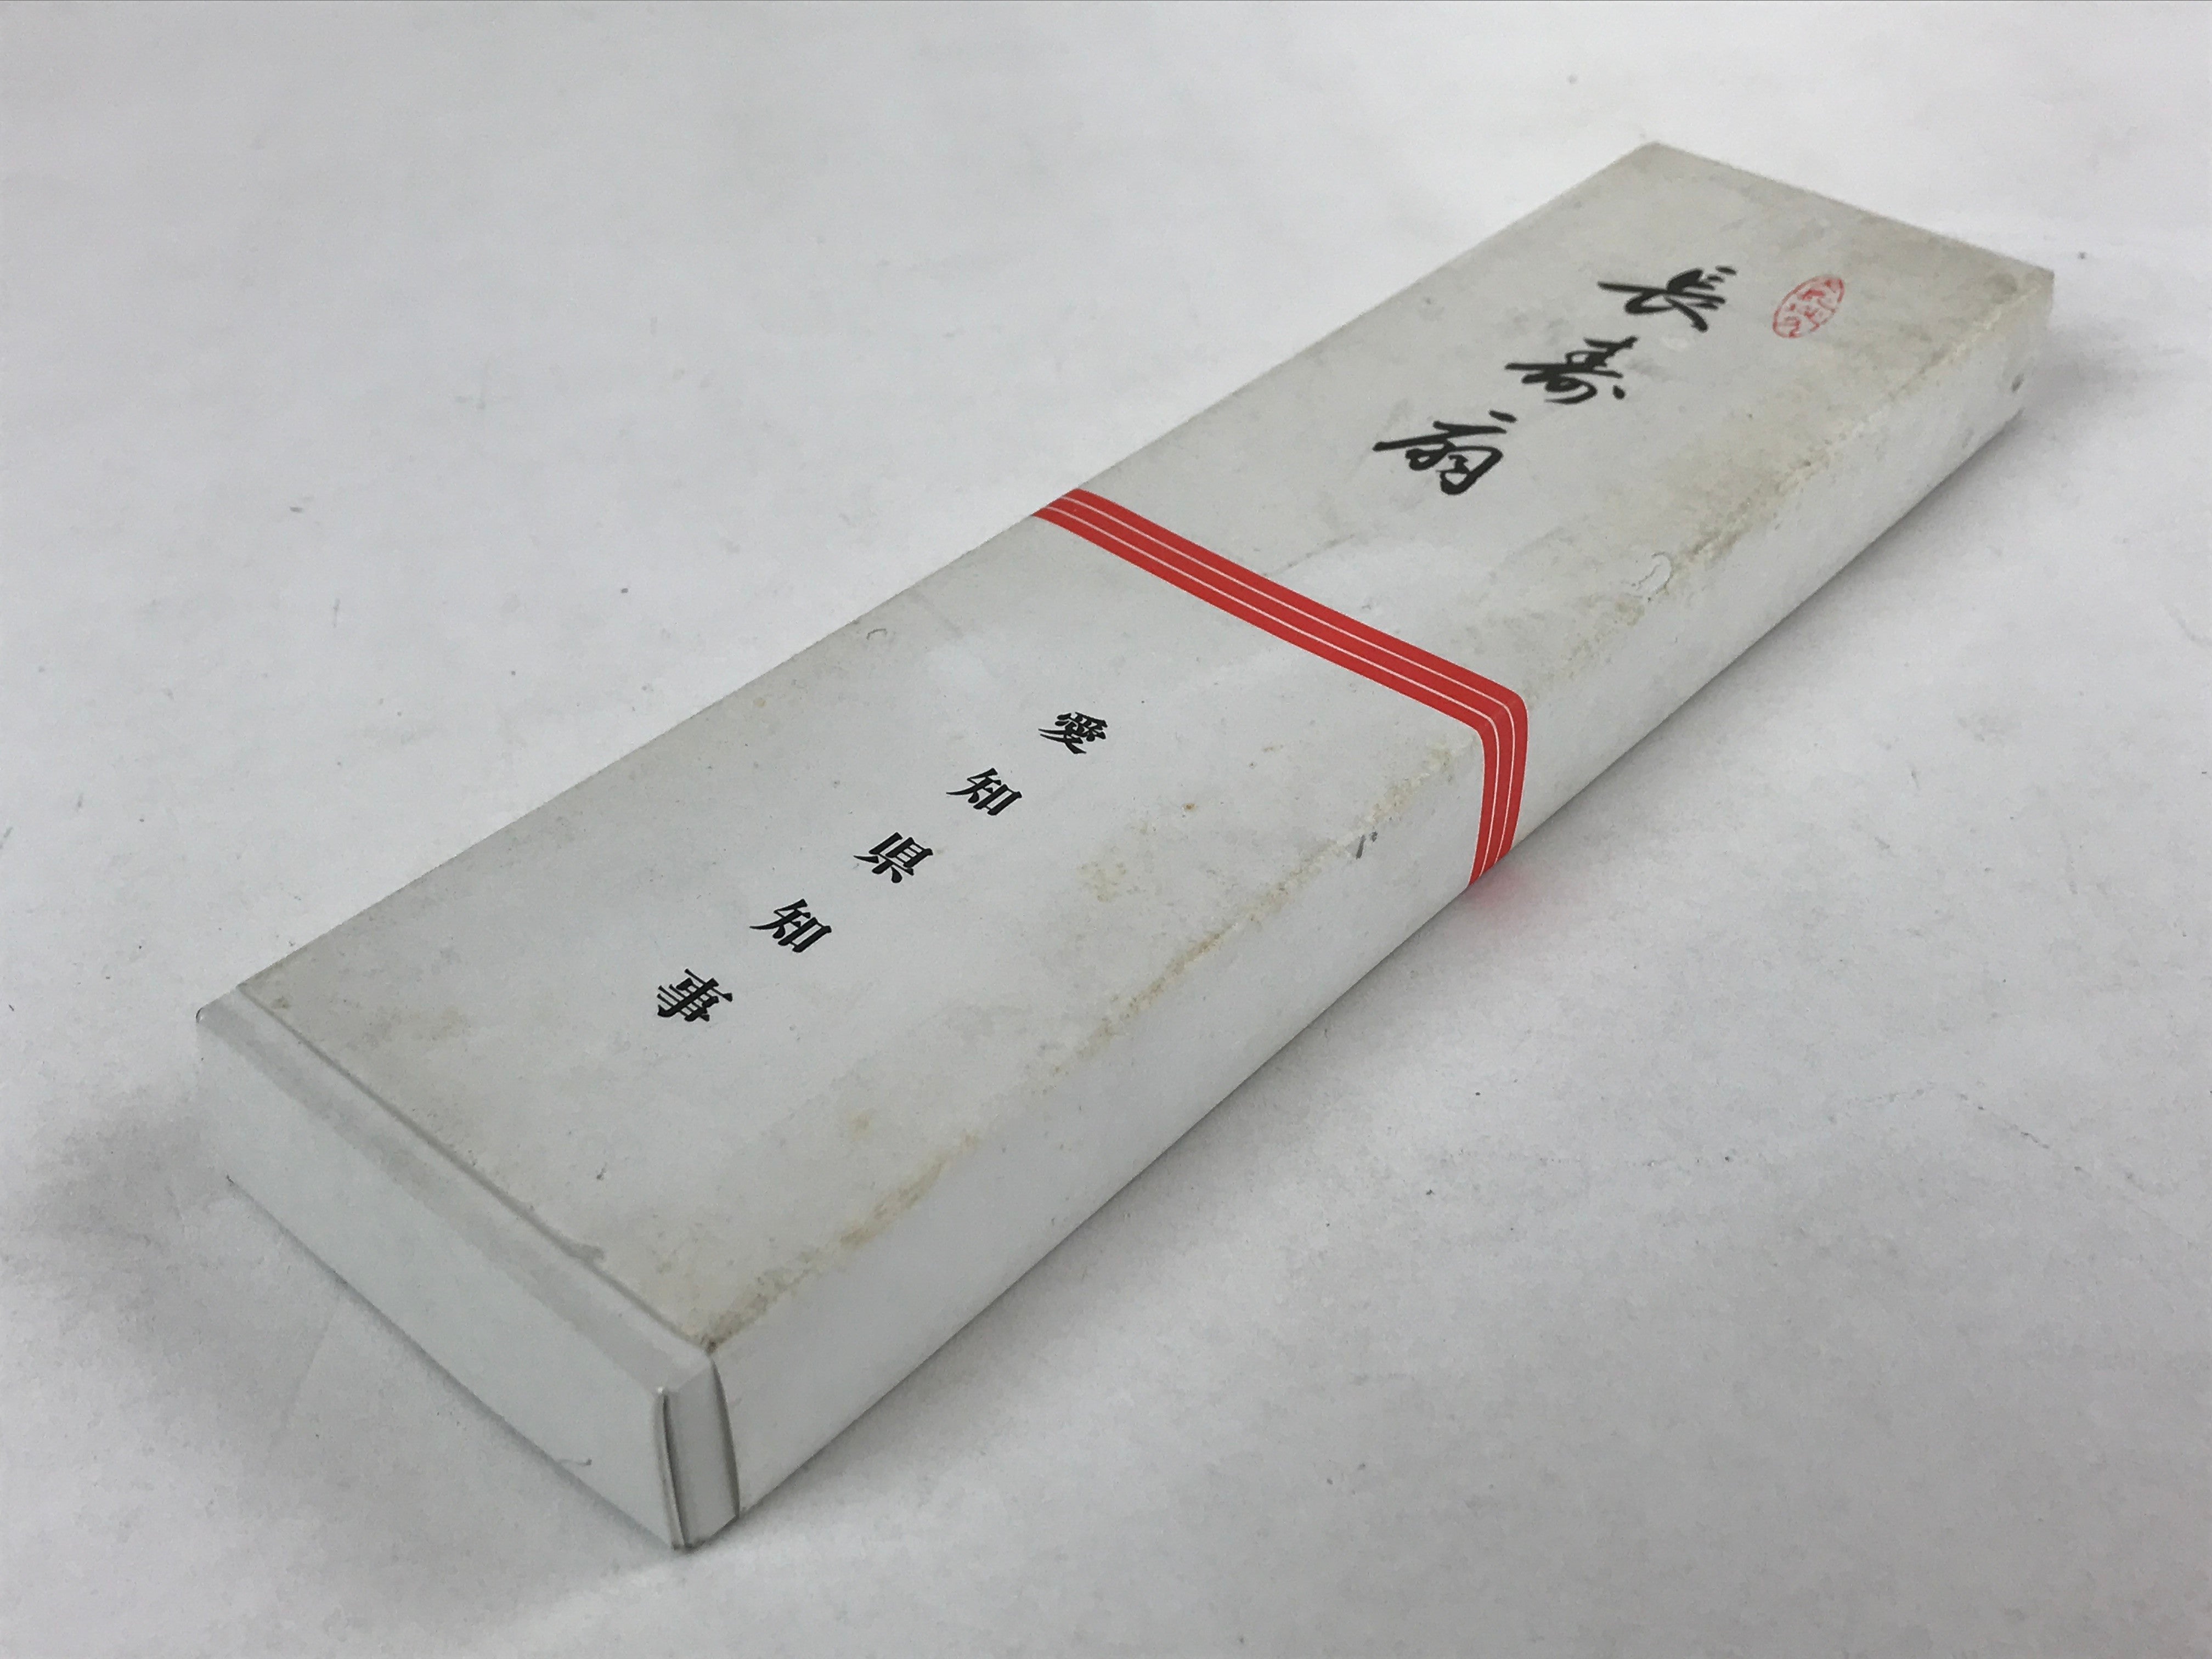 Japanese Folding Fan Sensu Bamboo Frame Red Flower W/ Black Stand 4D691